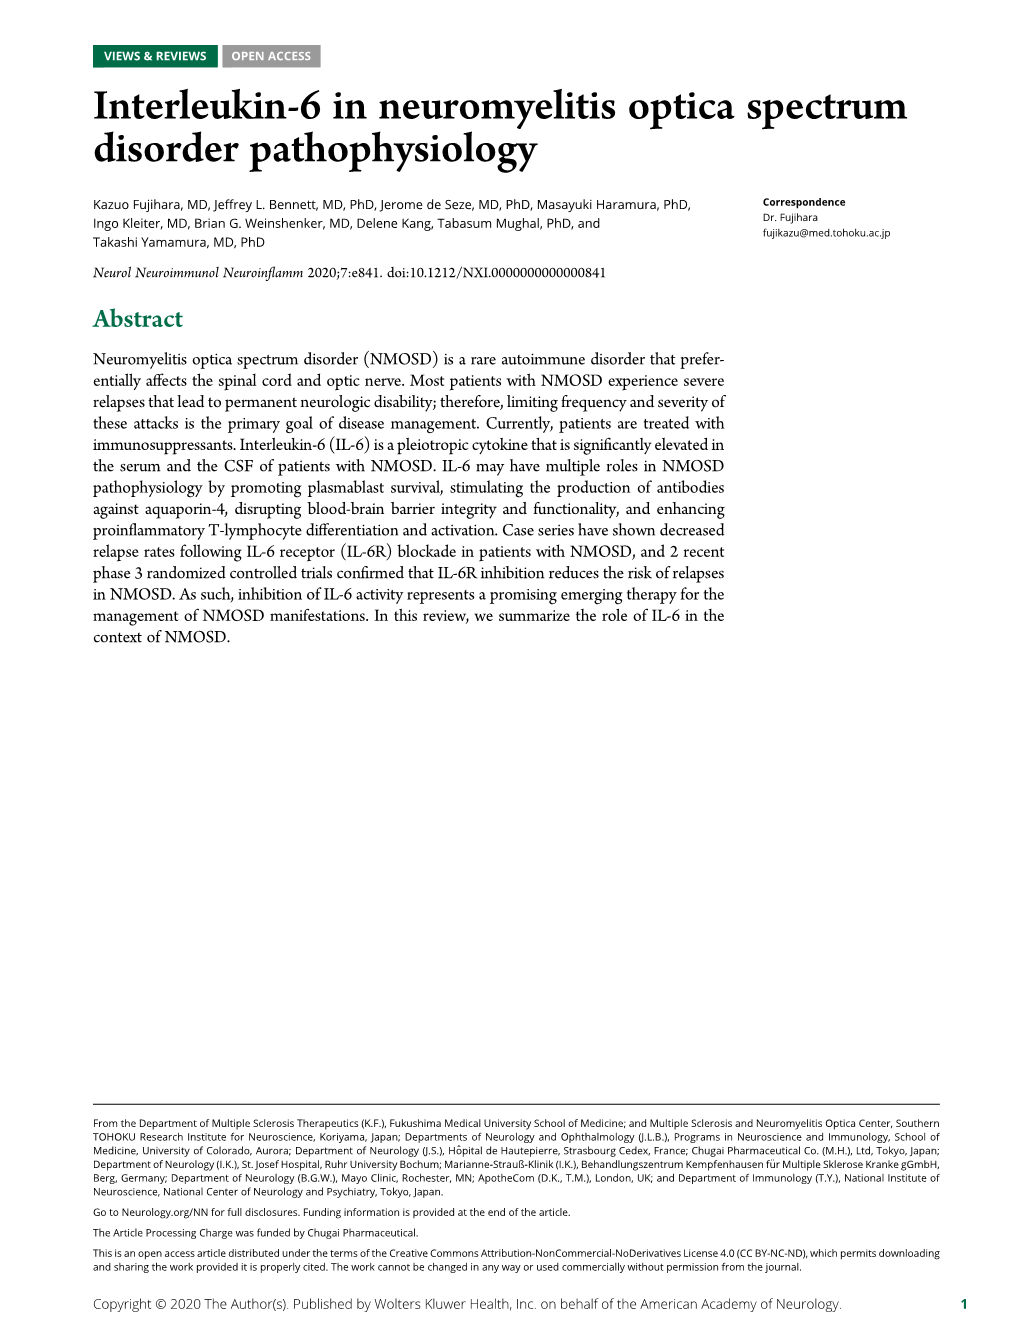 Interleukin-6 in Neuromyelitis Optica Spectrum Disorder Pathophysiology